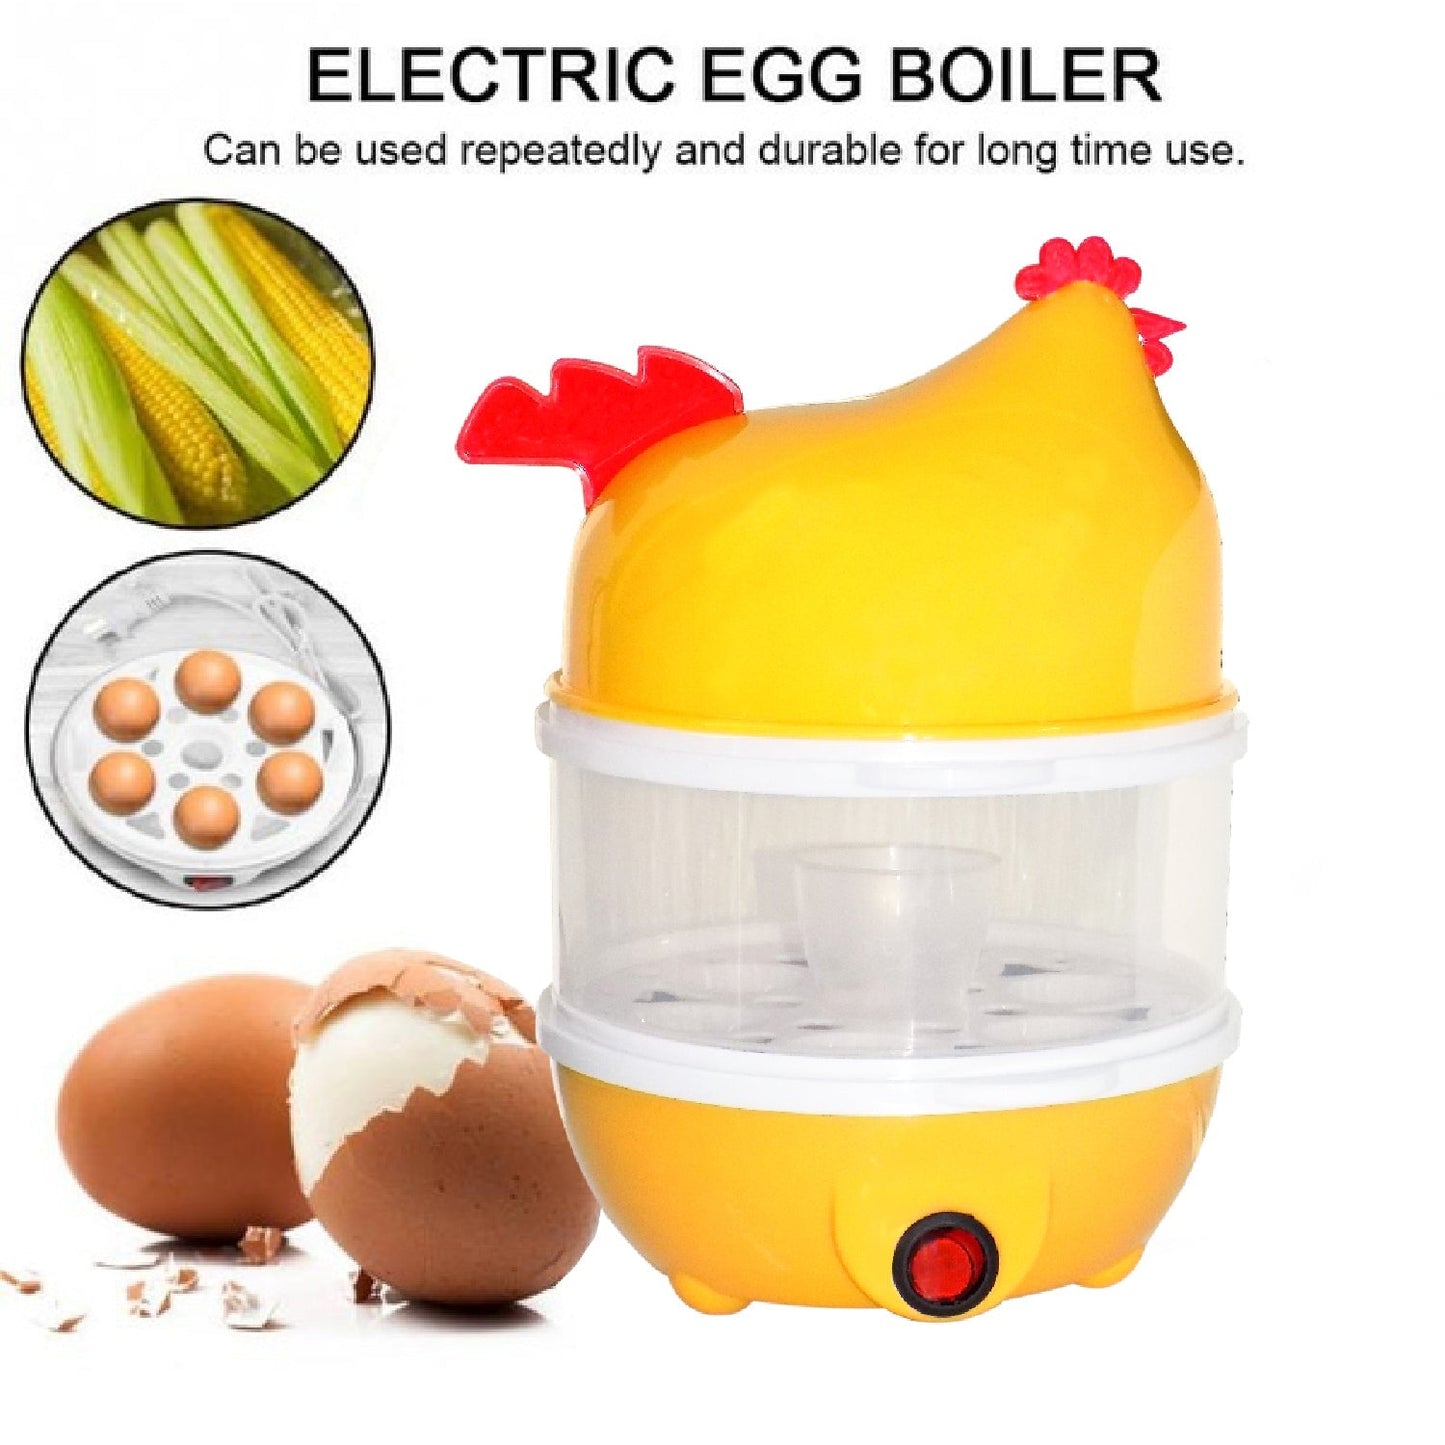 2443 Hen Shape Egg Boiler Home Machine with Tray DeoDap